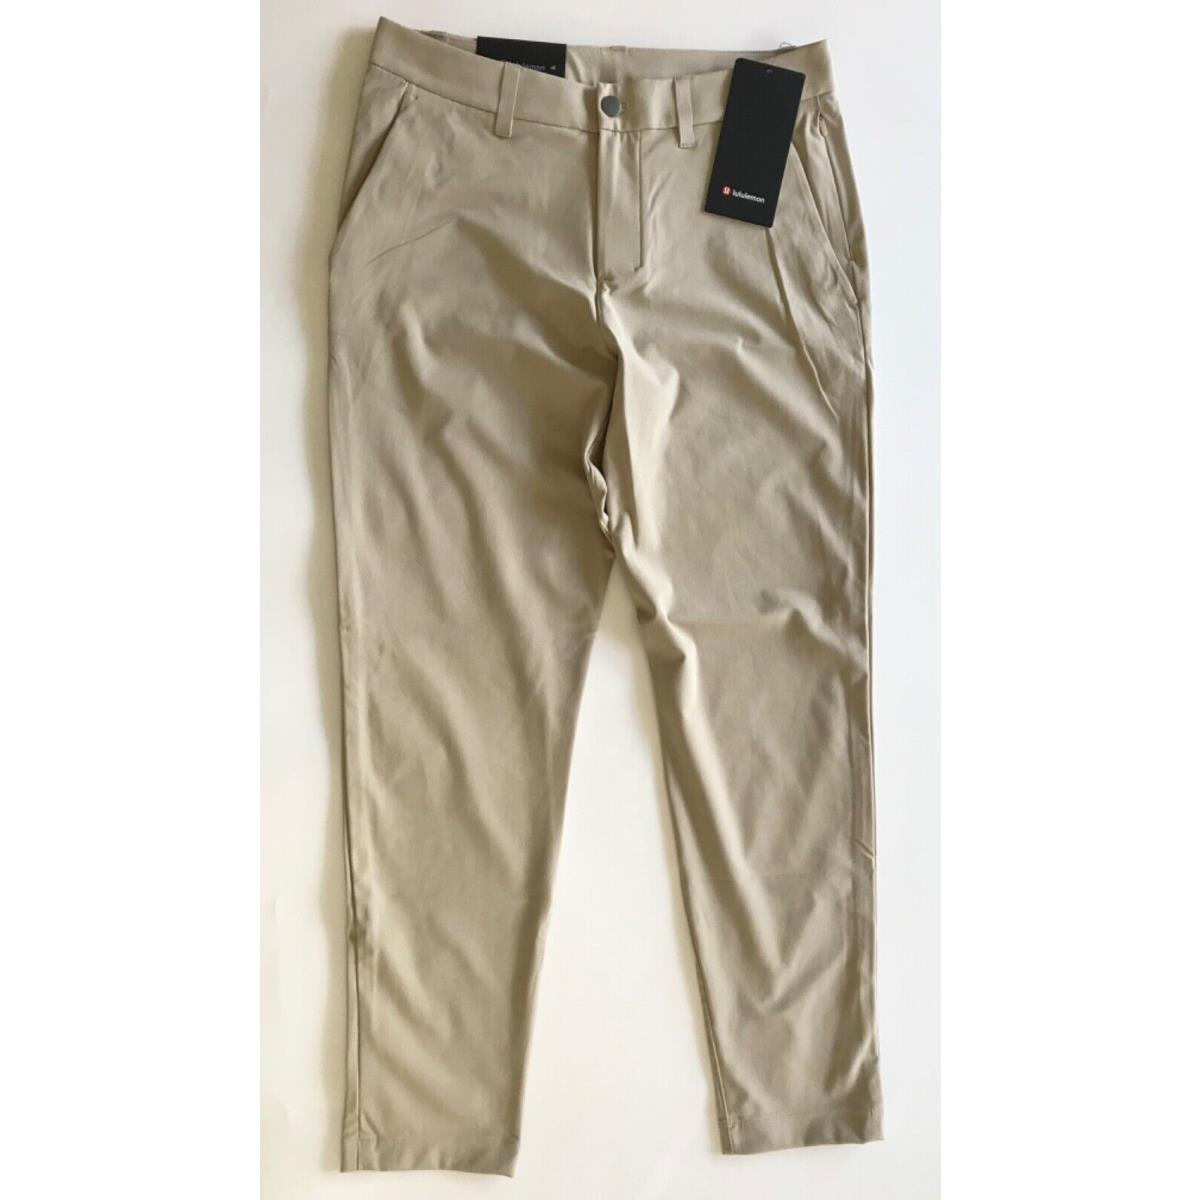 Lululemon Men s Abc Trouser Pant Slim Fit LM5AQXS Trnh Trench Size 33 x 28